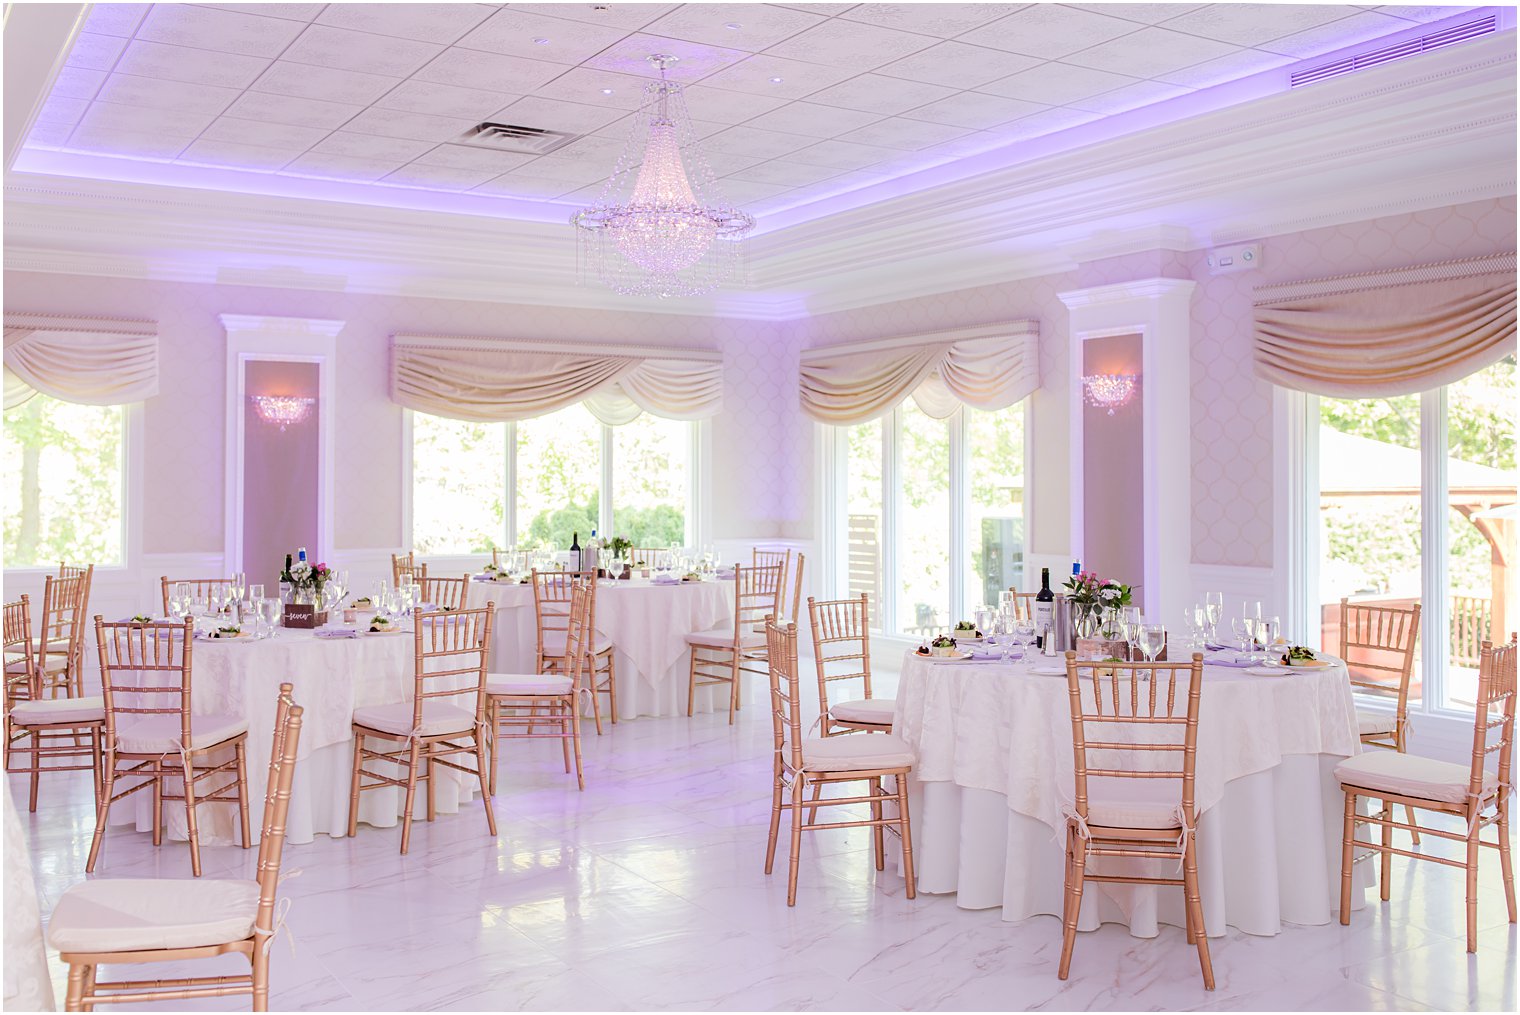 wedding reception at The English Manor with purple uplighting